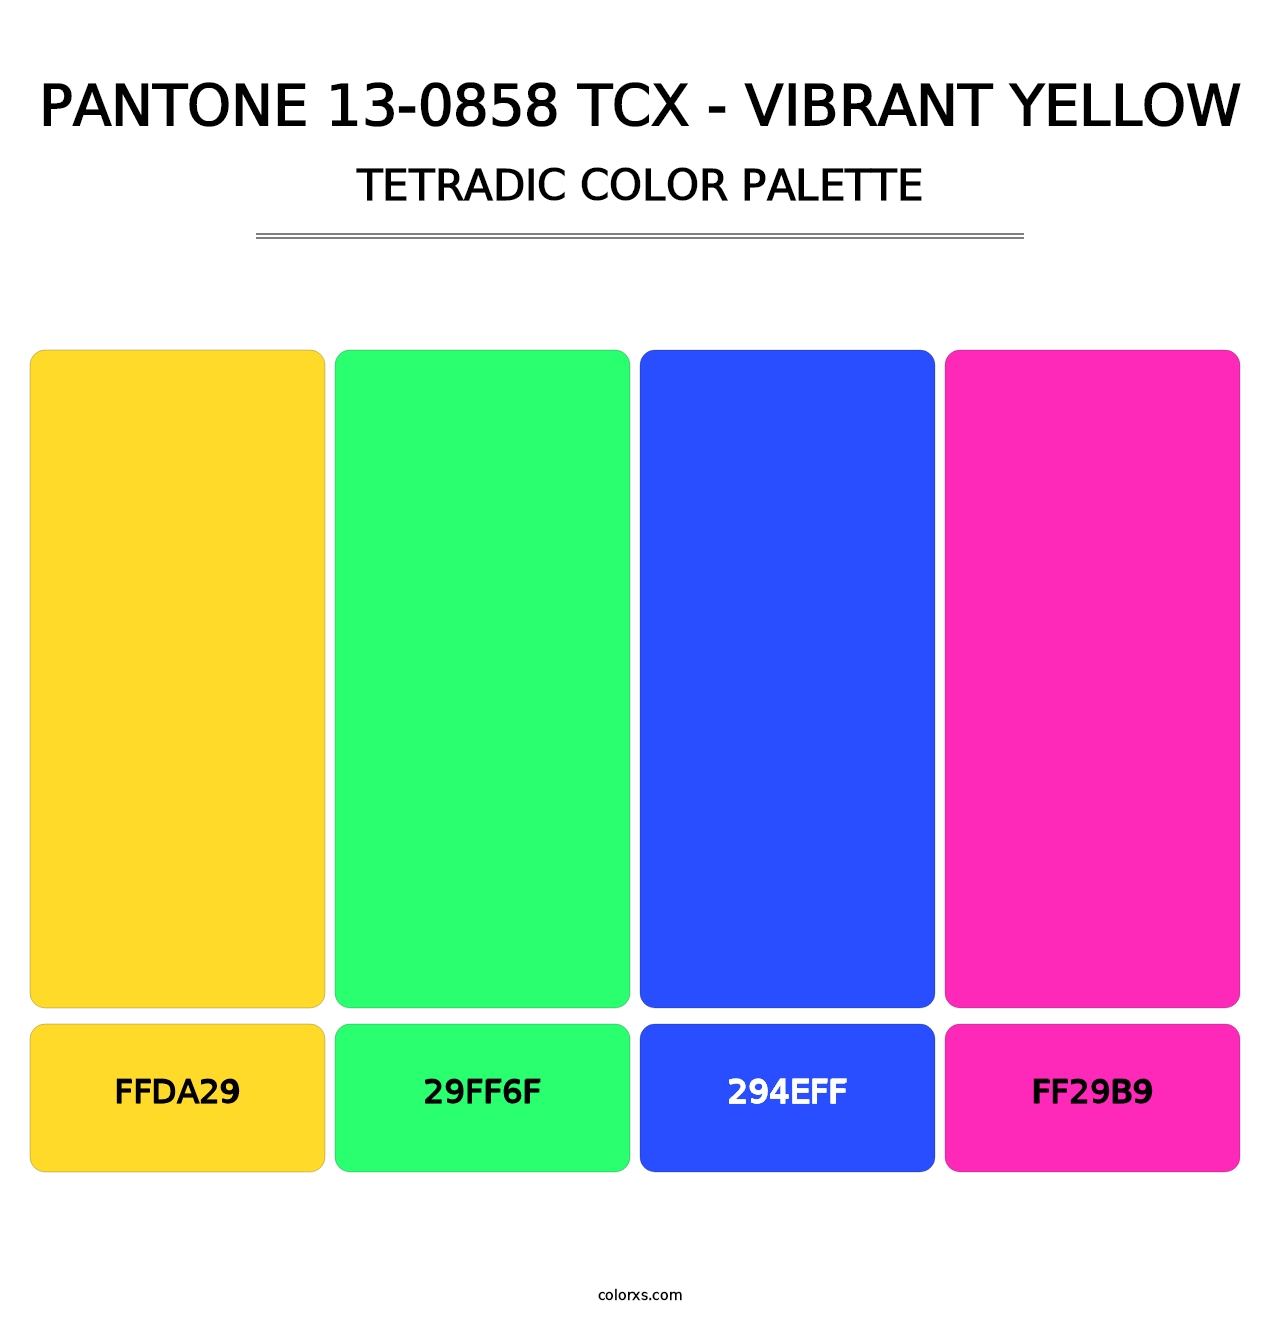 PANTONE 13-0858 TCX - Vibrant Yellow - Tetradic Color Palette